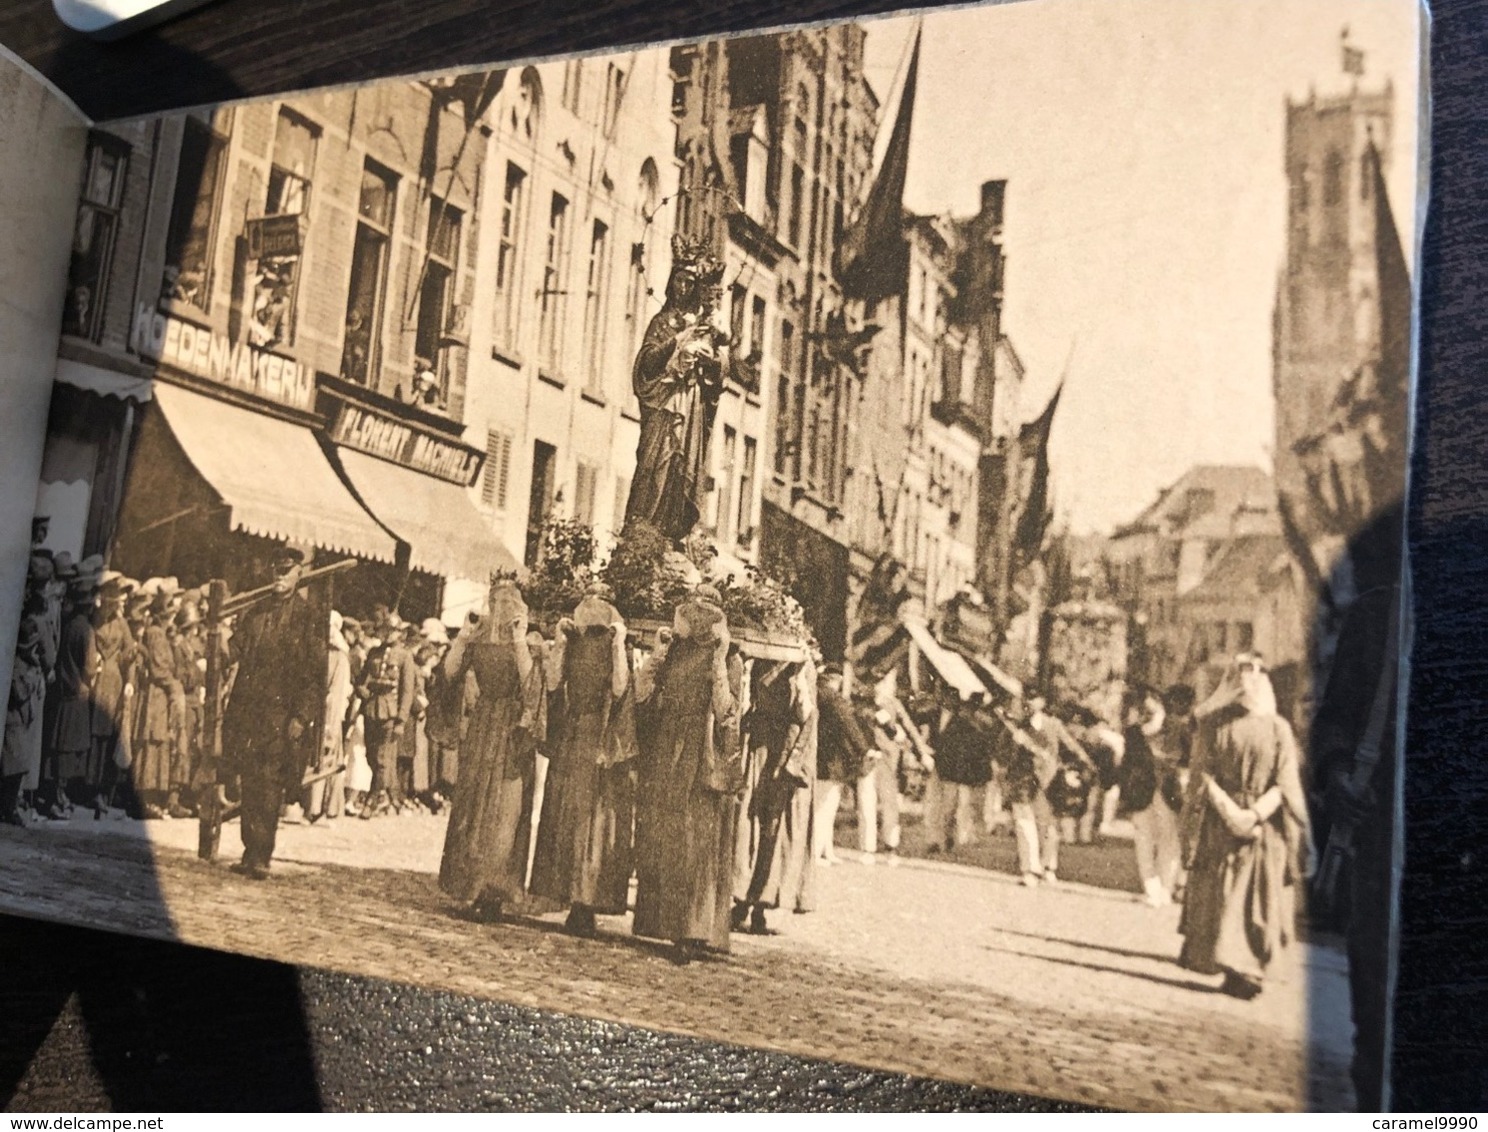 Brugge procession du saint sang Heilige bloedprocessie boekje 23 kaarten Brugge  . M 3890